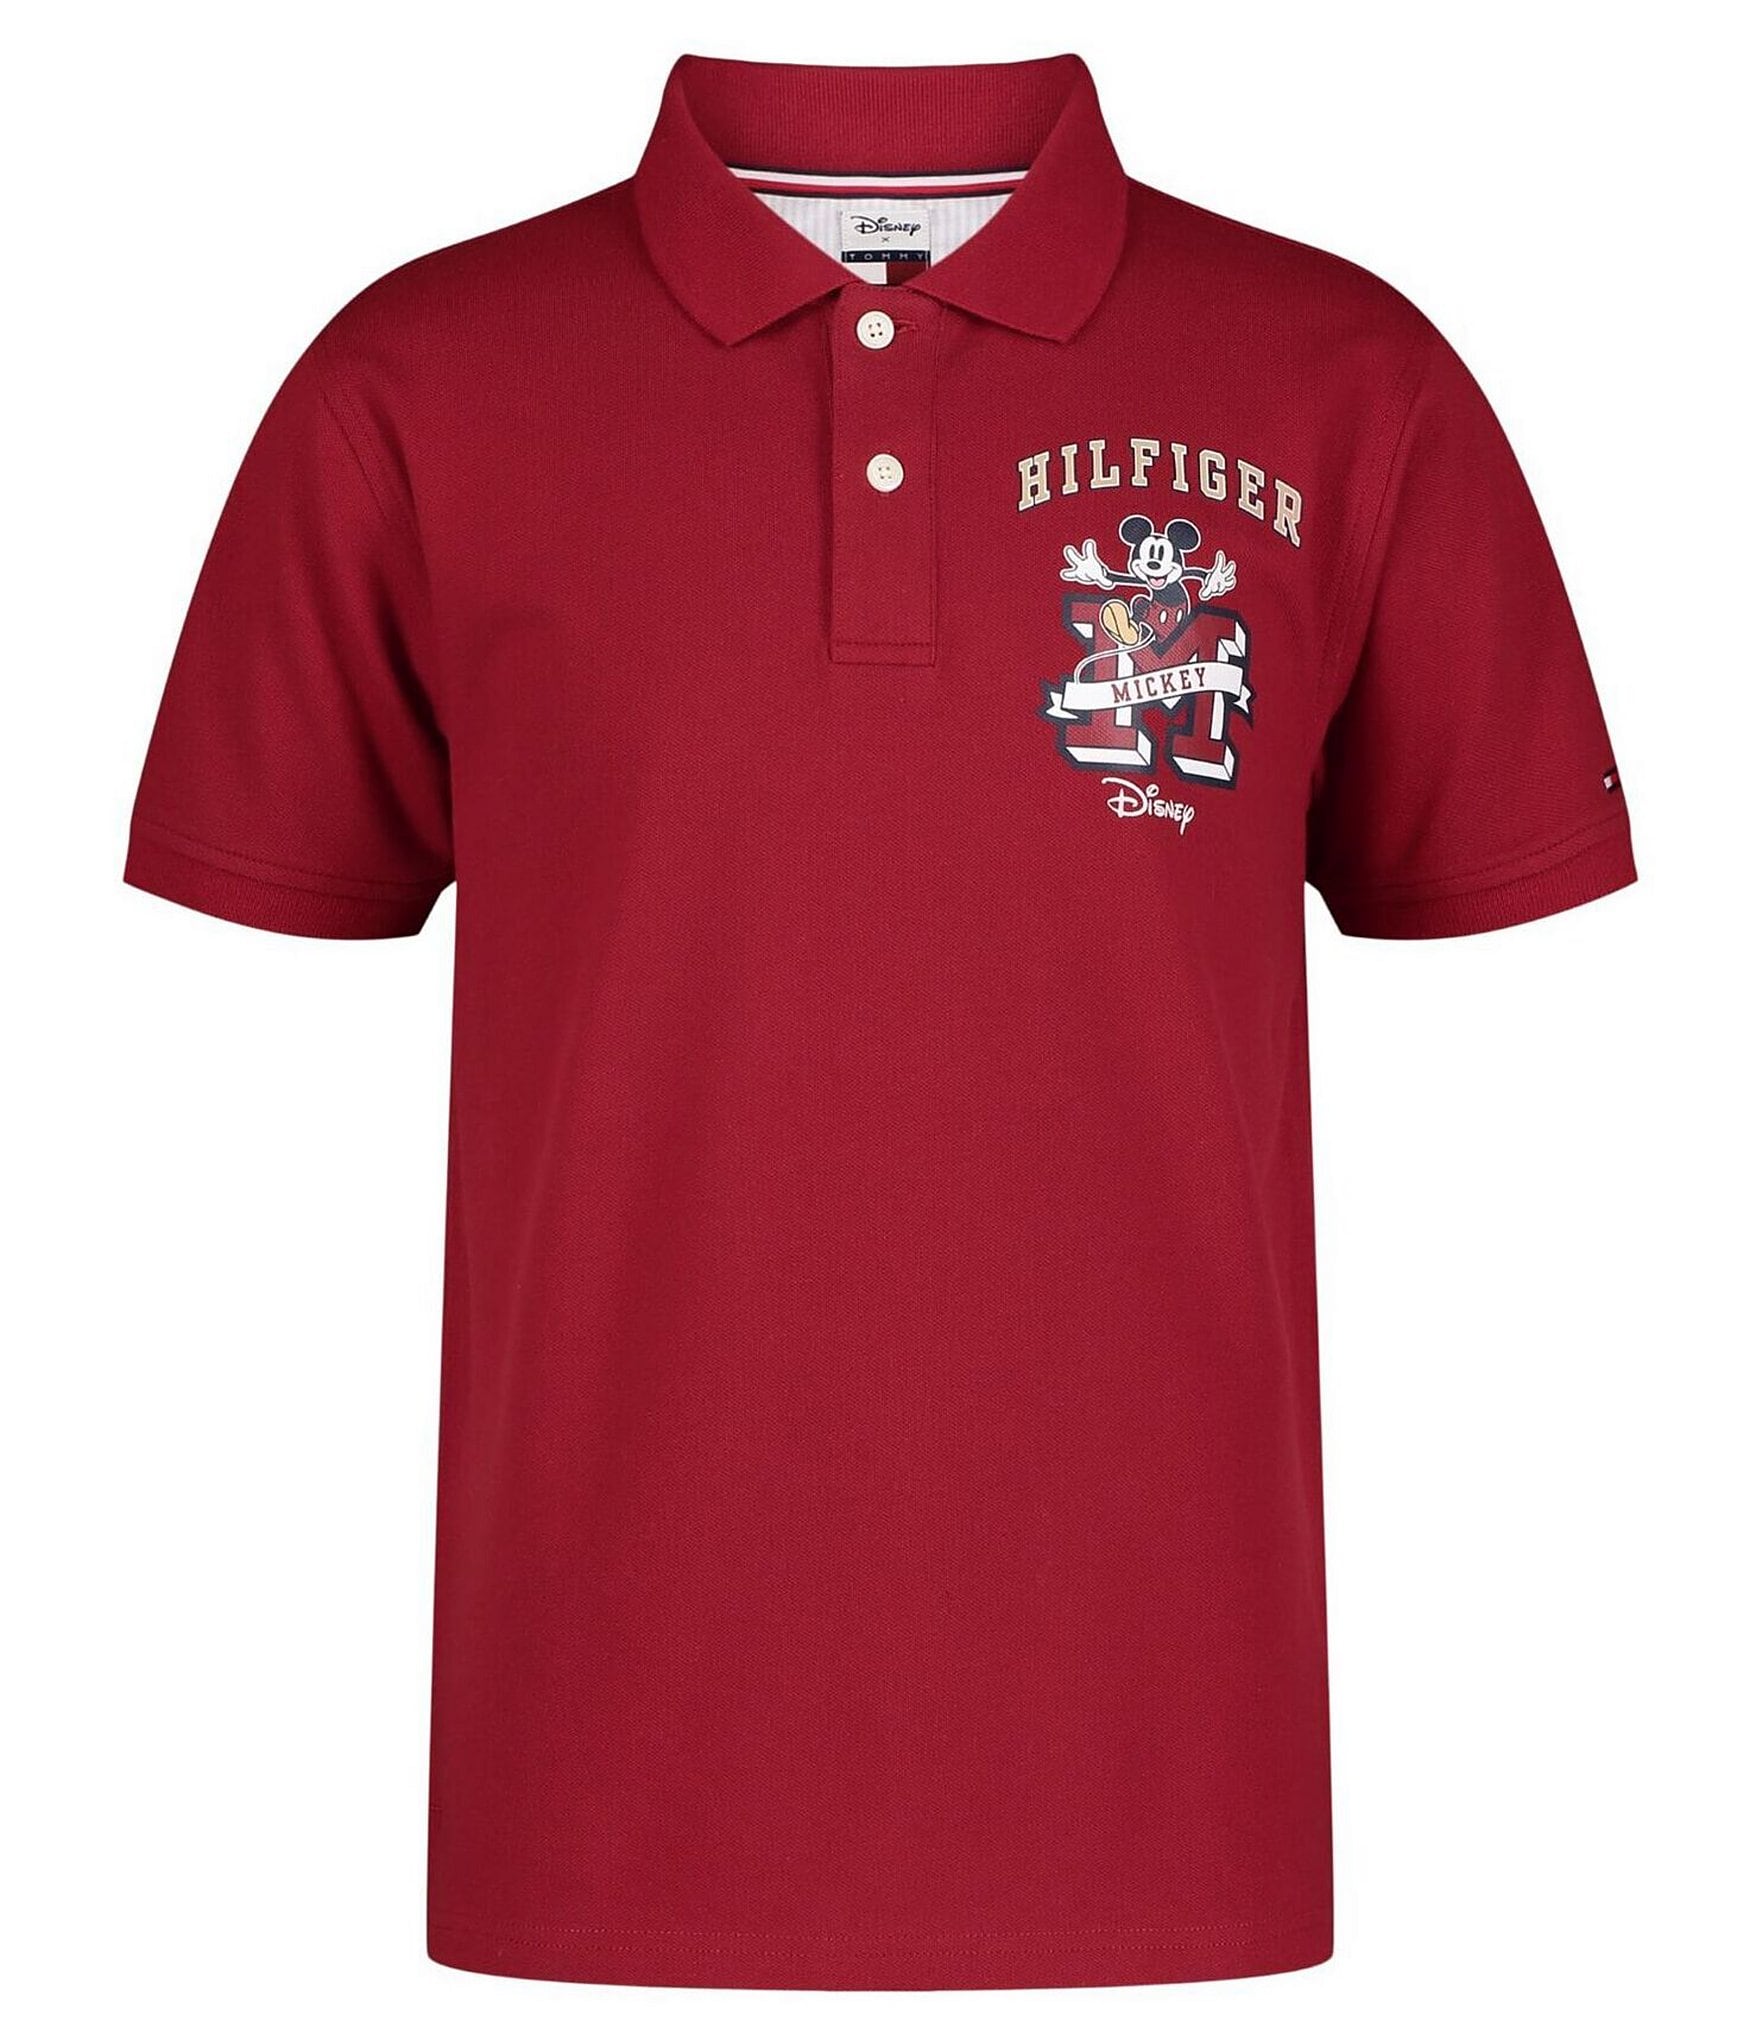 Tommy Hilfiger Short Boys Collegiate Polo Dillard\'s Shirt Big Mouse 8-20 Sleeve Disney Mickey 